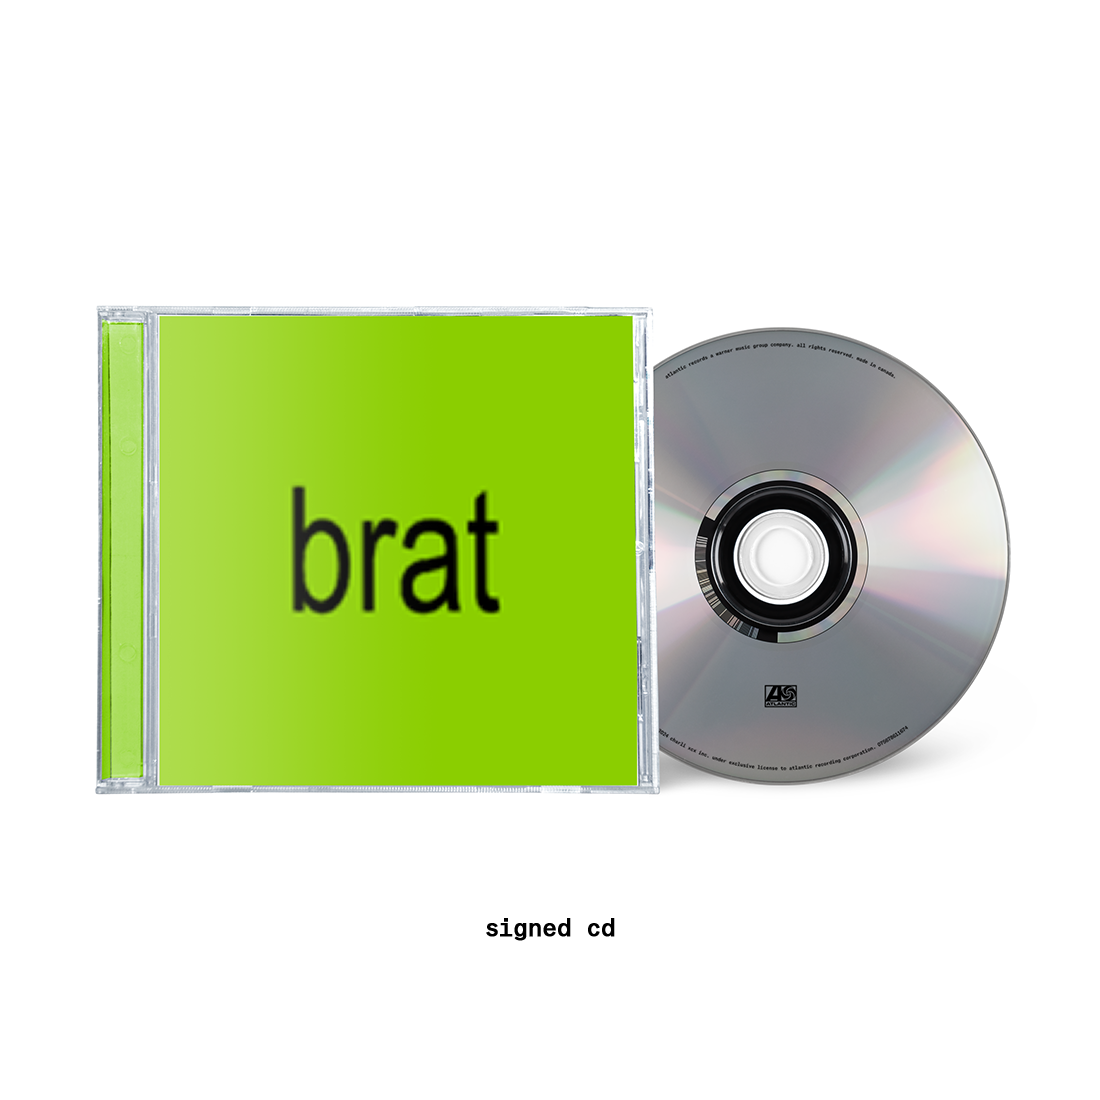 BRAT (signed cd)